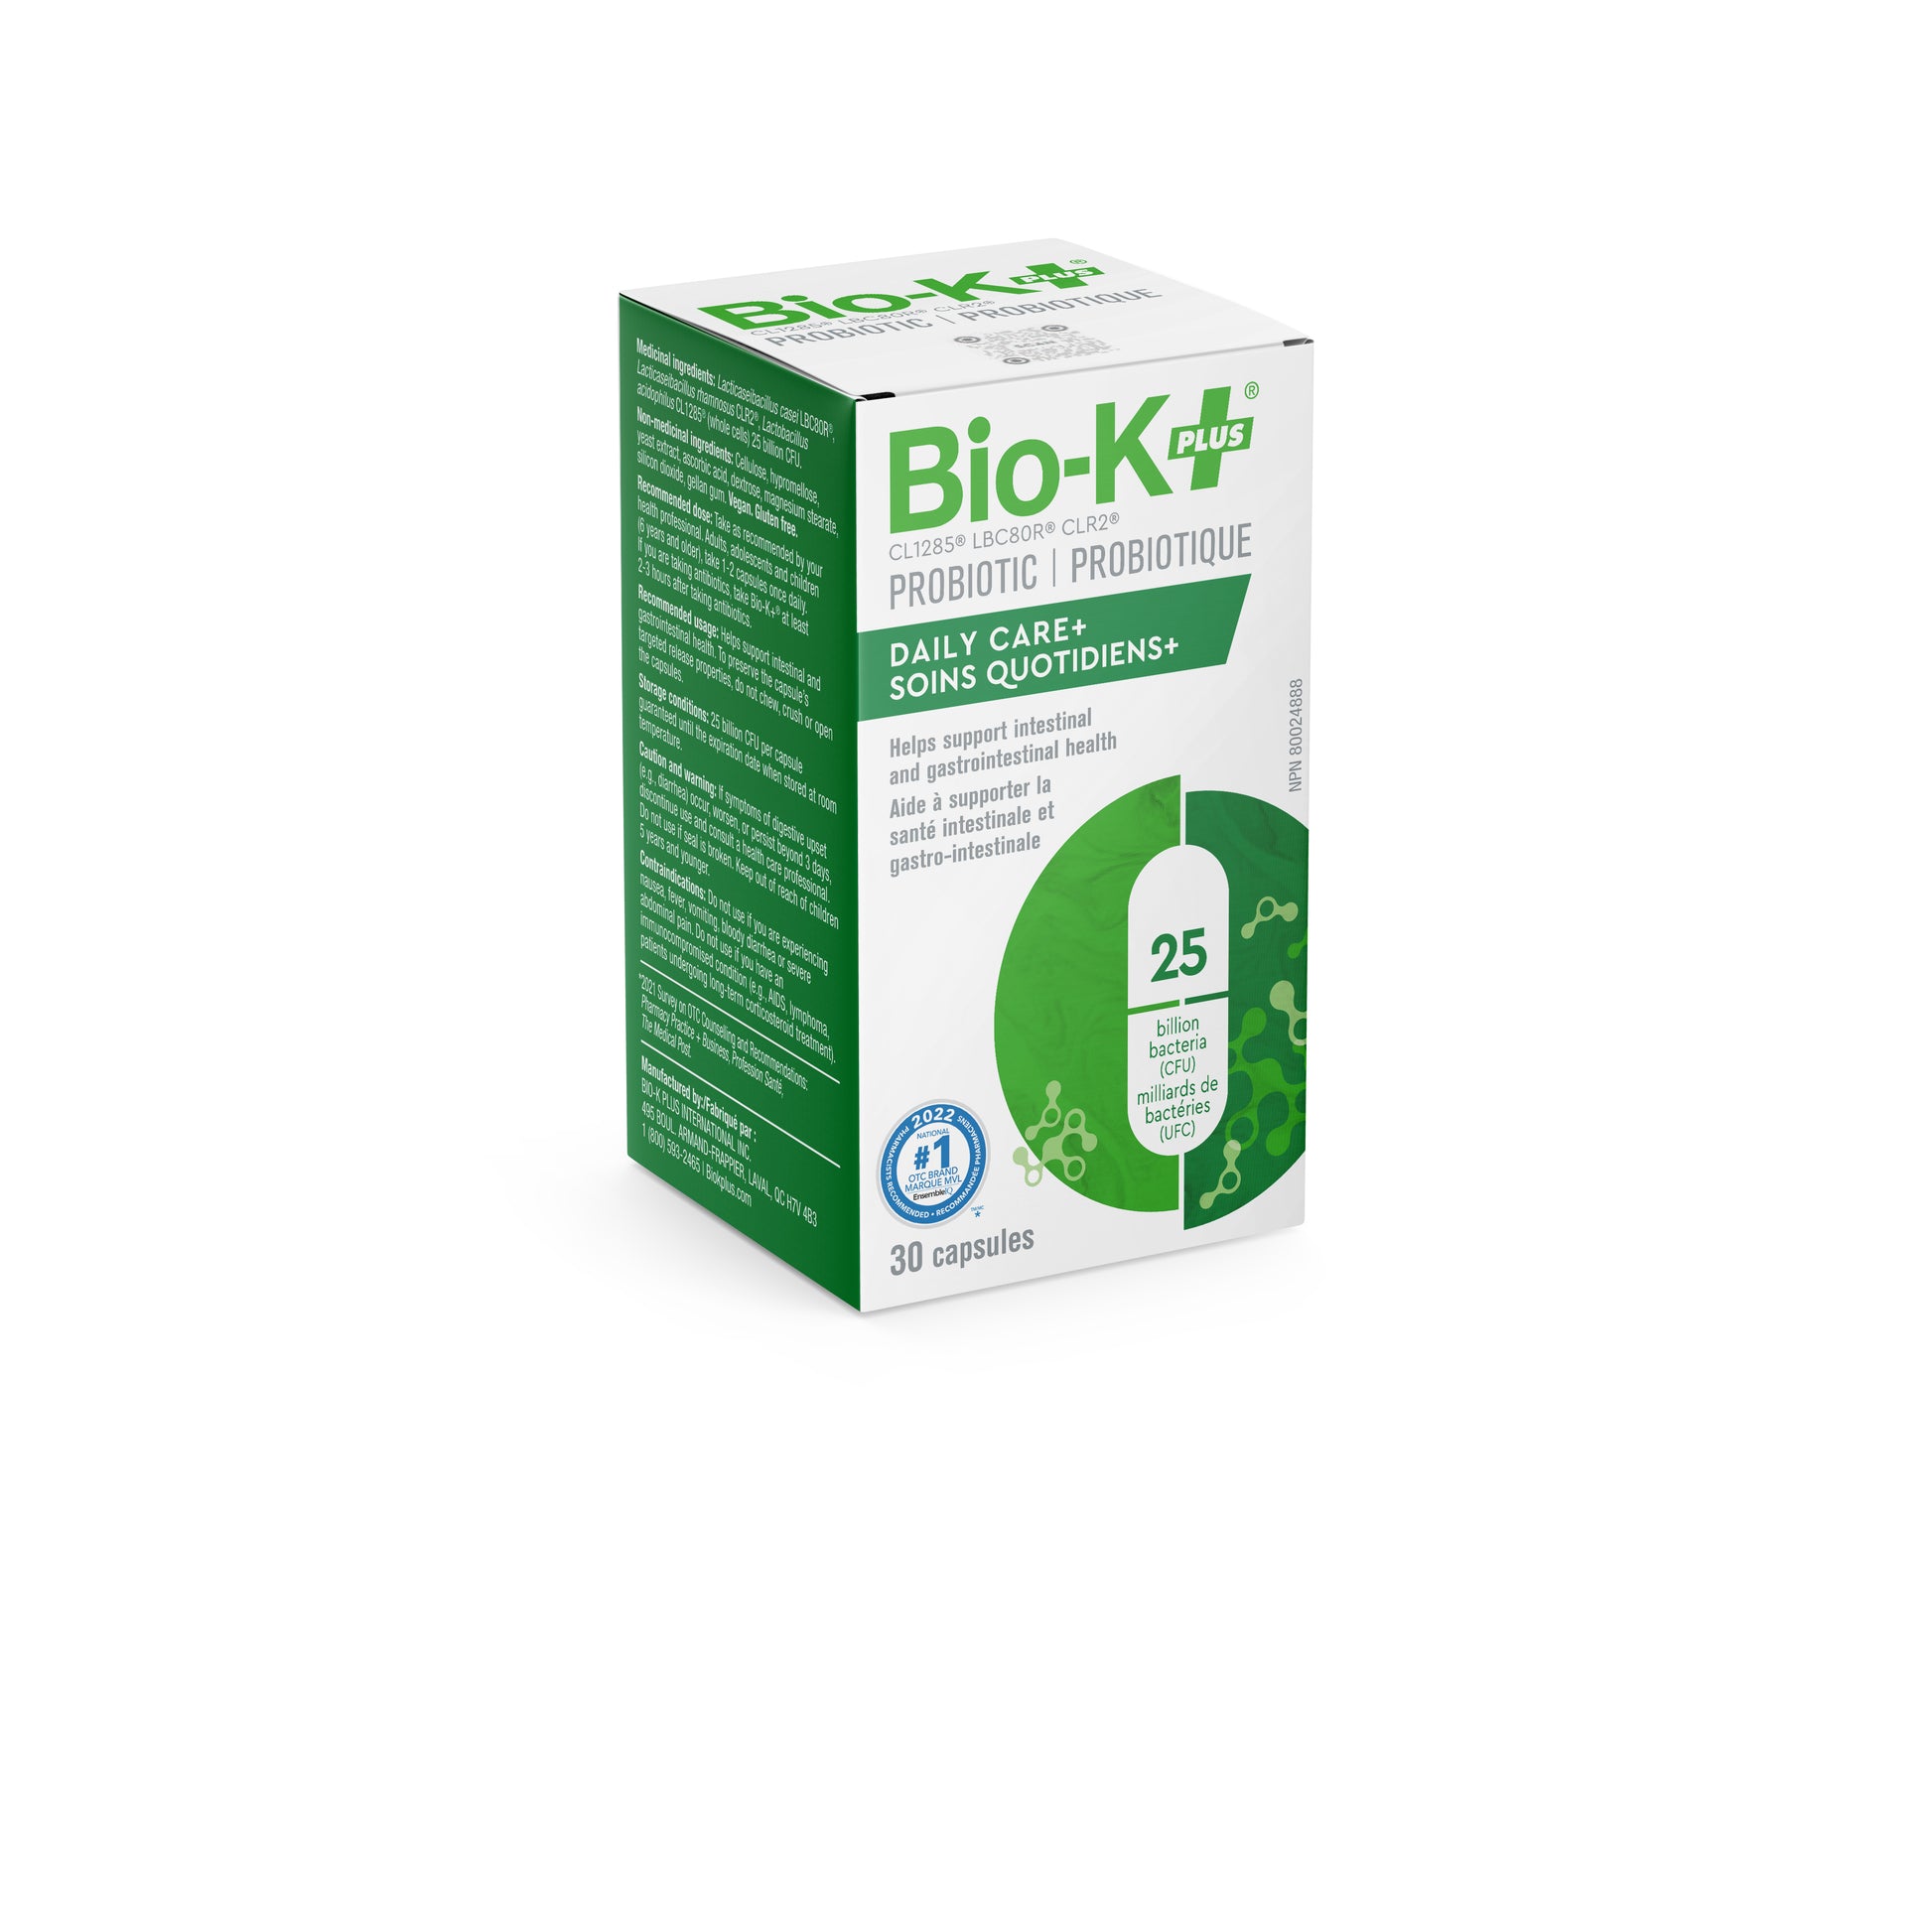 Box of Bottle of probiotics Capsules - Bio-K+ Daily Care+ 25 Billion